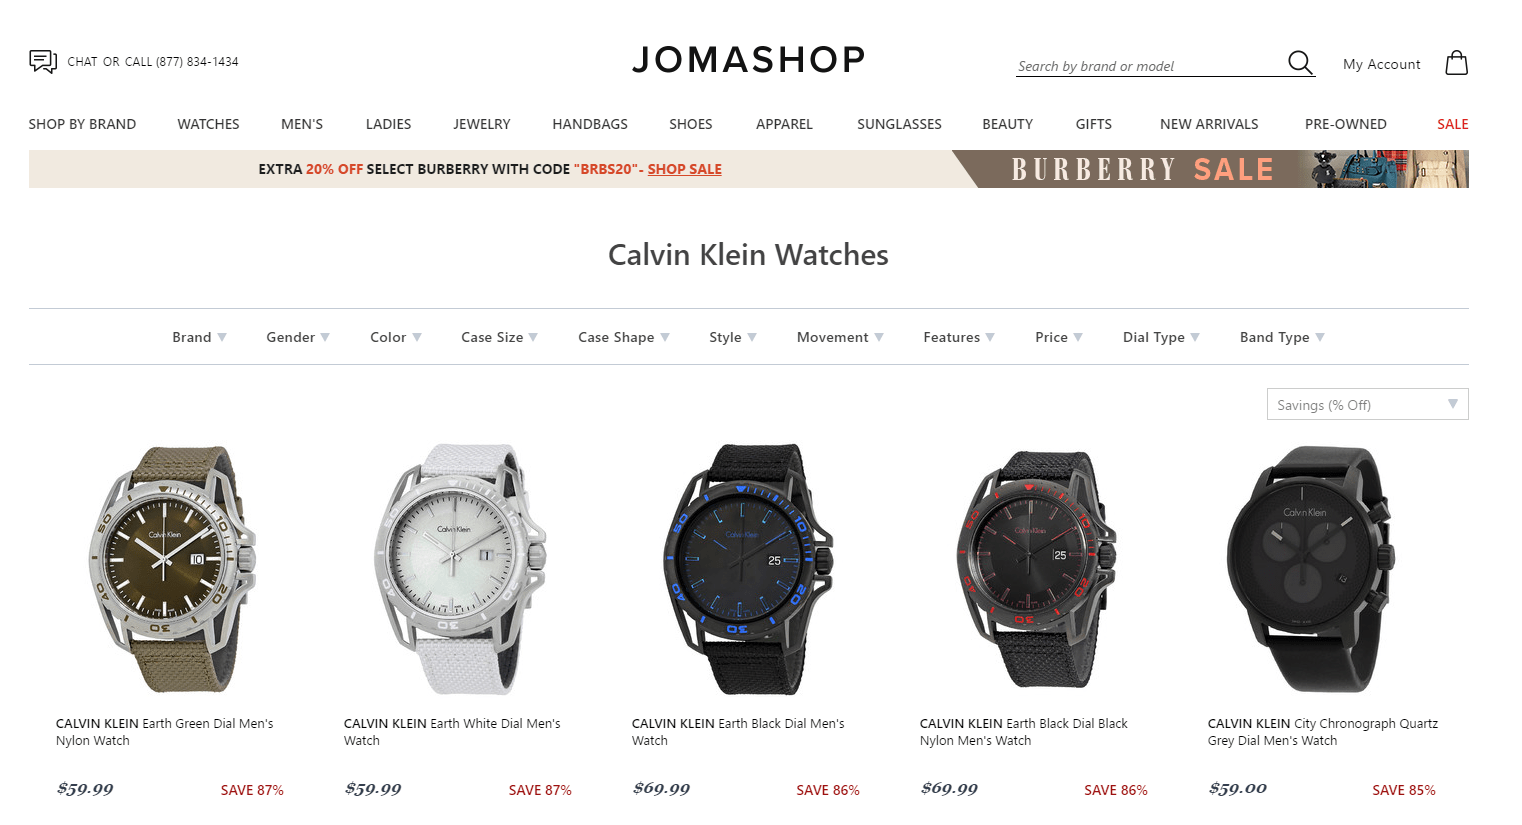 Jomashop折扣代码2020-jomashop现有精选Calvin Klein手表低至1.1折促销部分叠加额外折扣